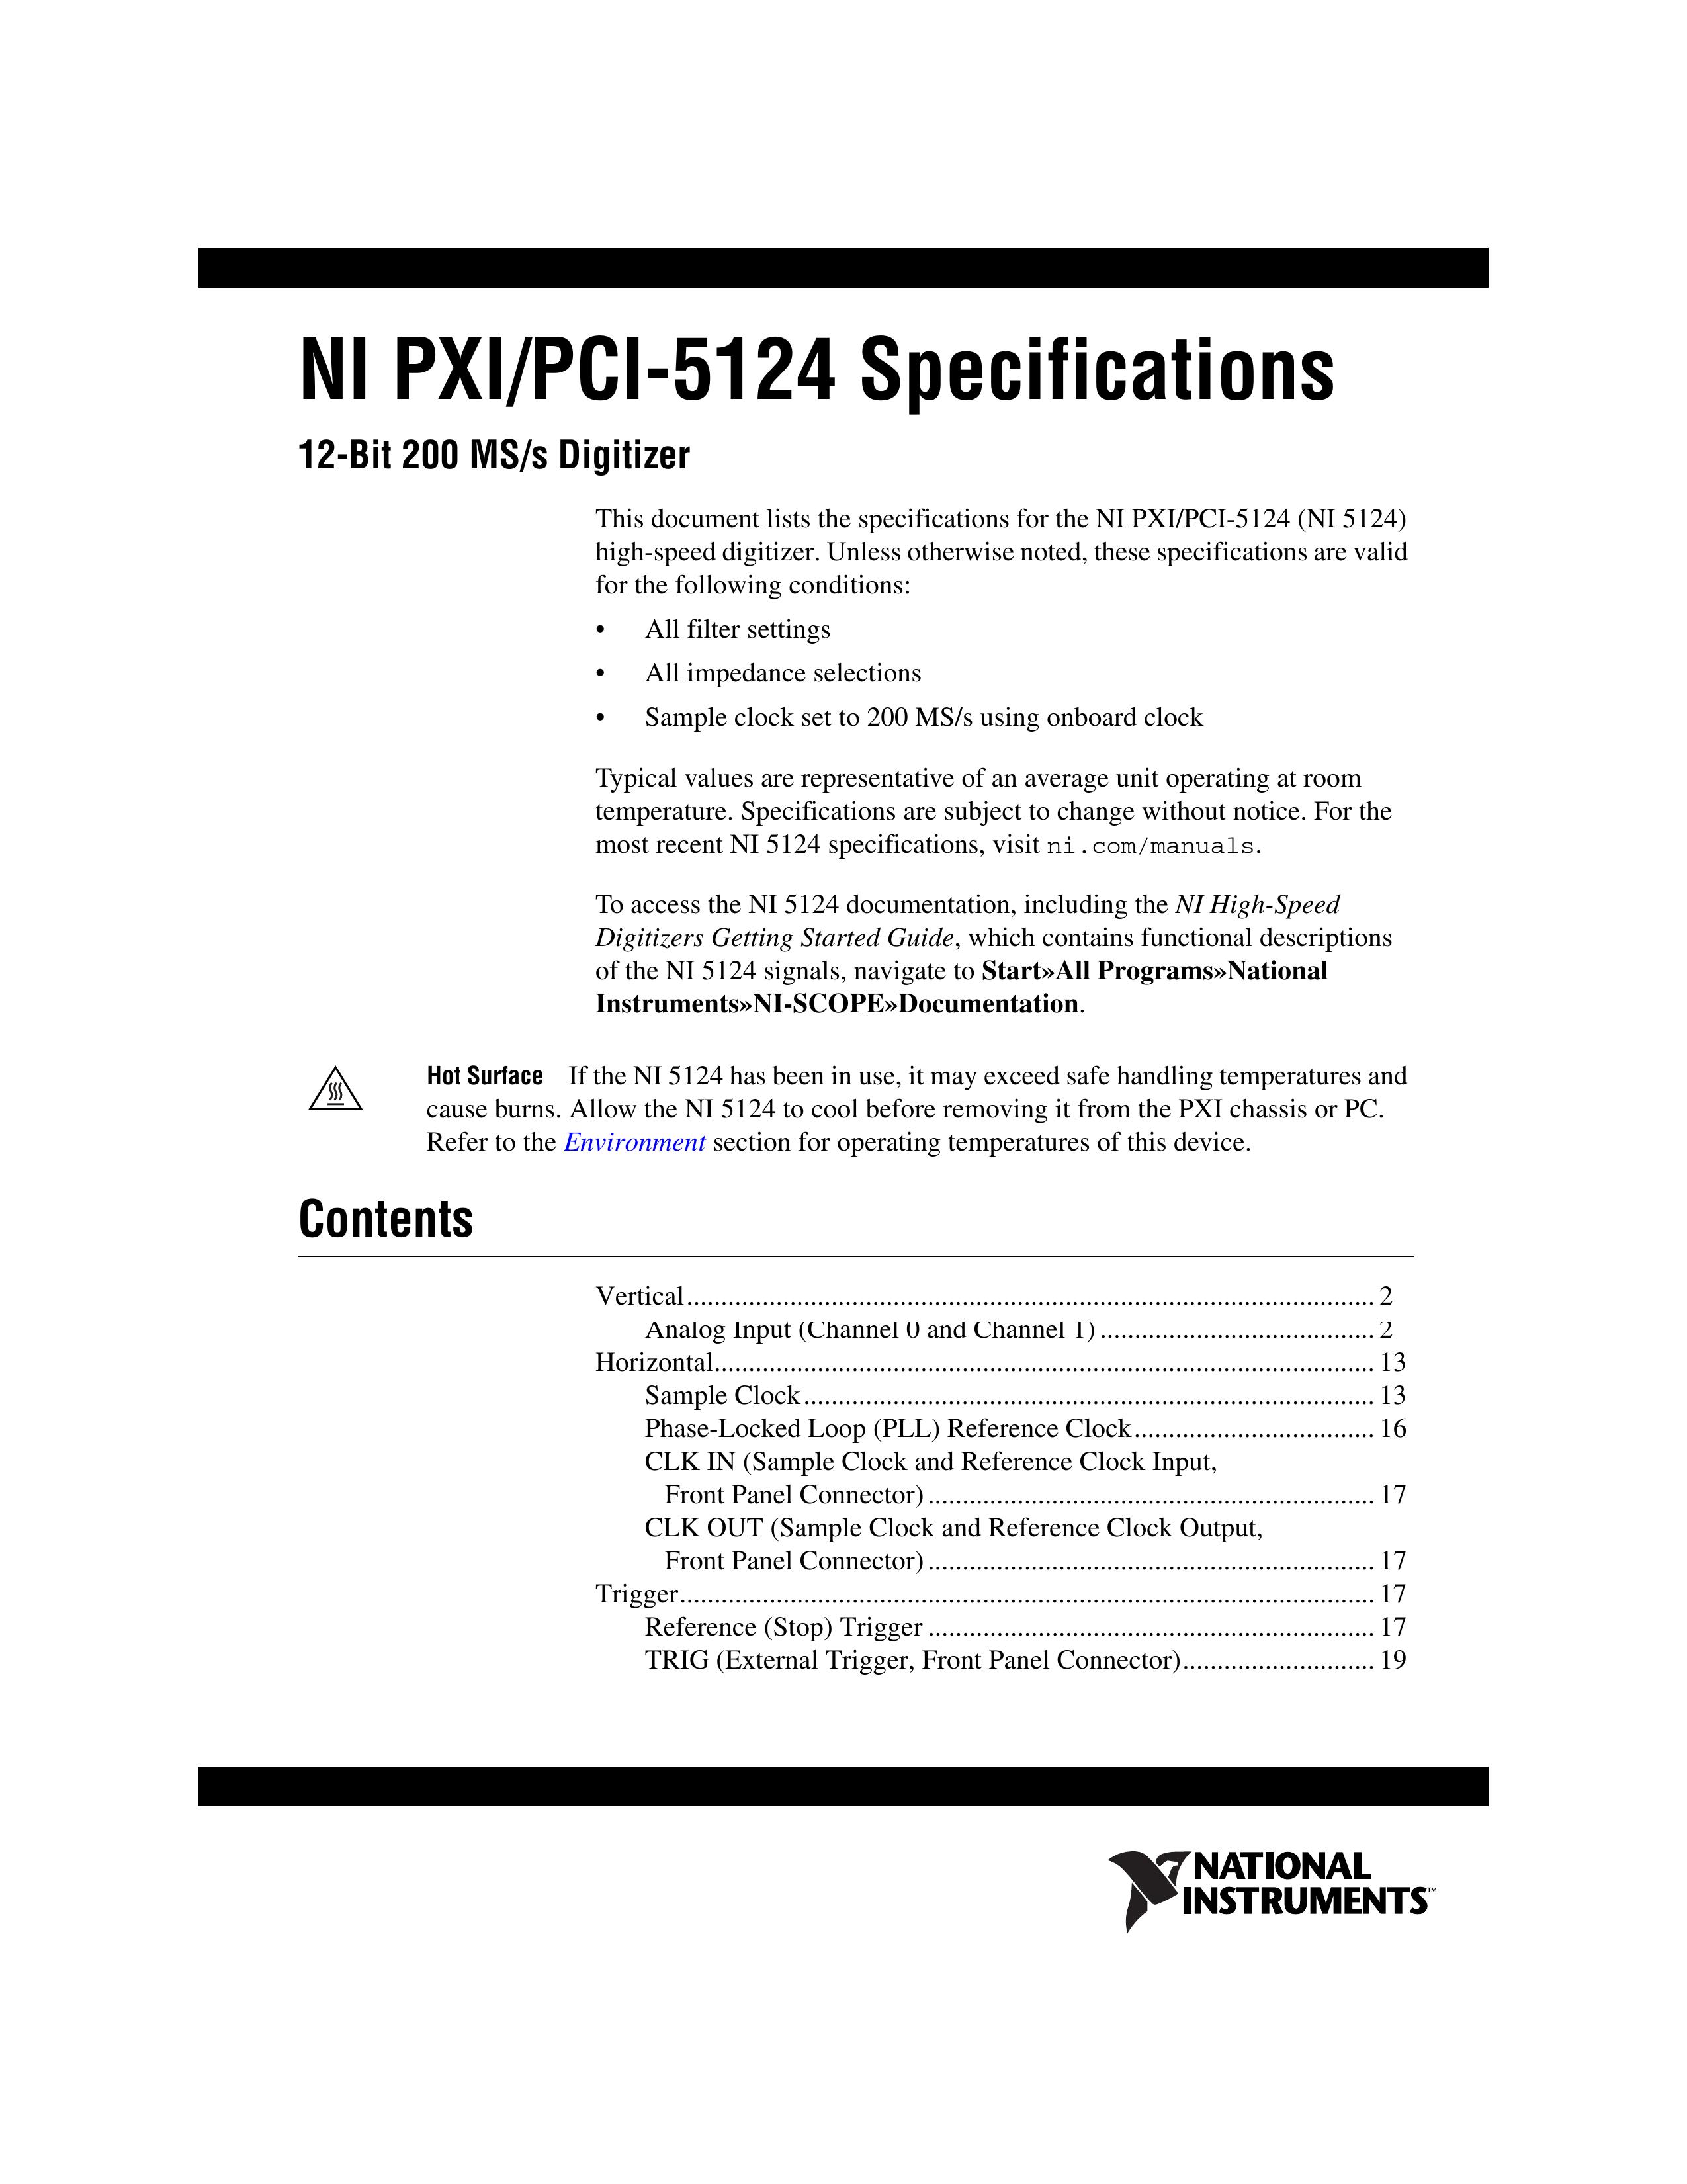 National Instruments NI PXI/PCI-5124 Digital Photo Keychain User Manual